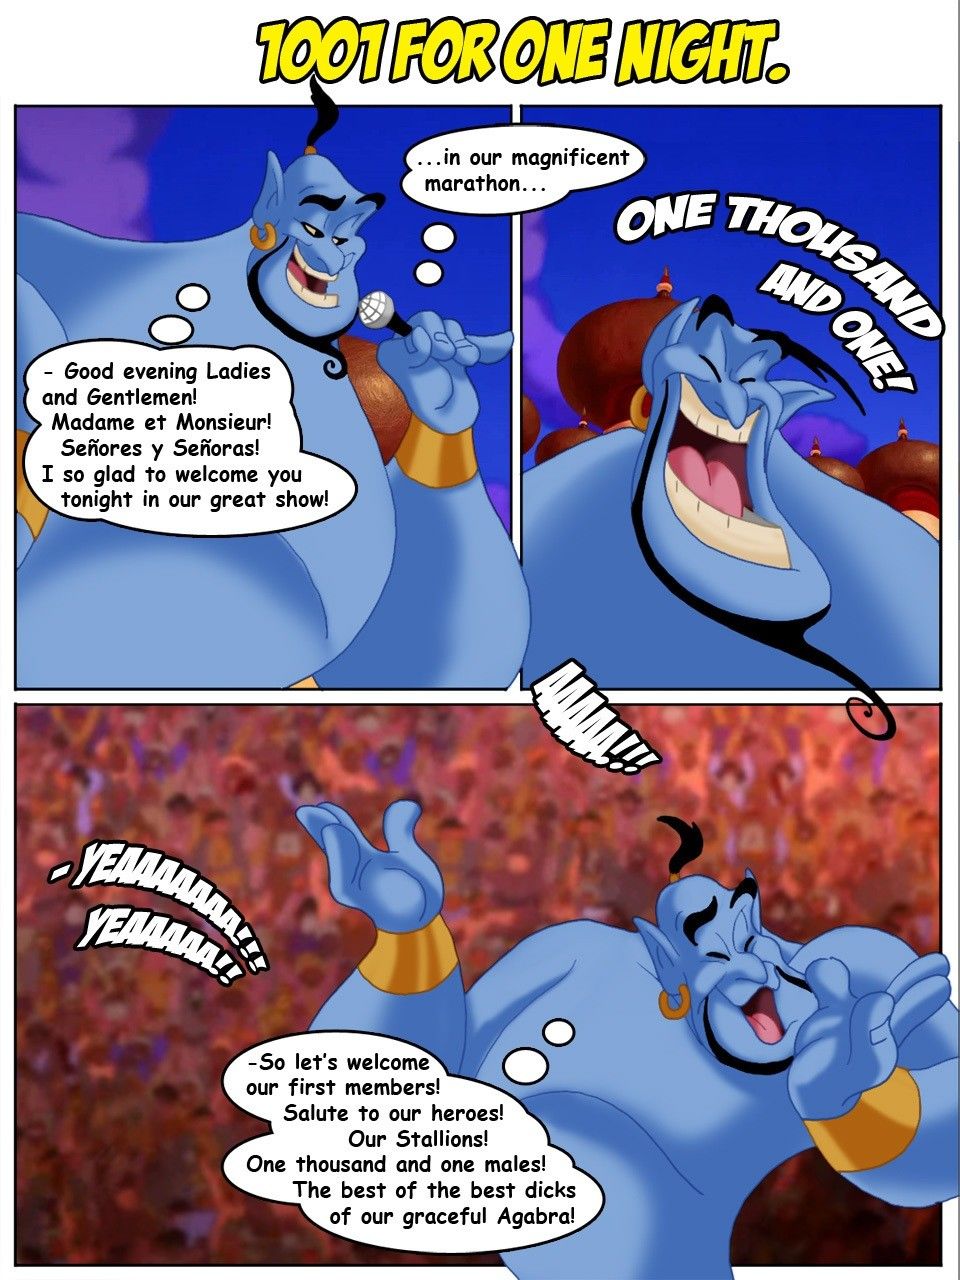 Aladdin-1001 For One Night-cartoon reality page 1